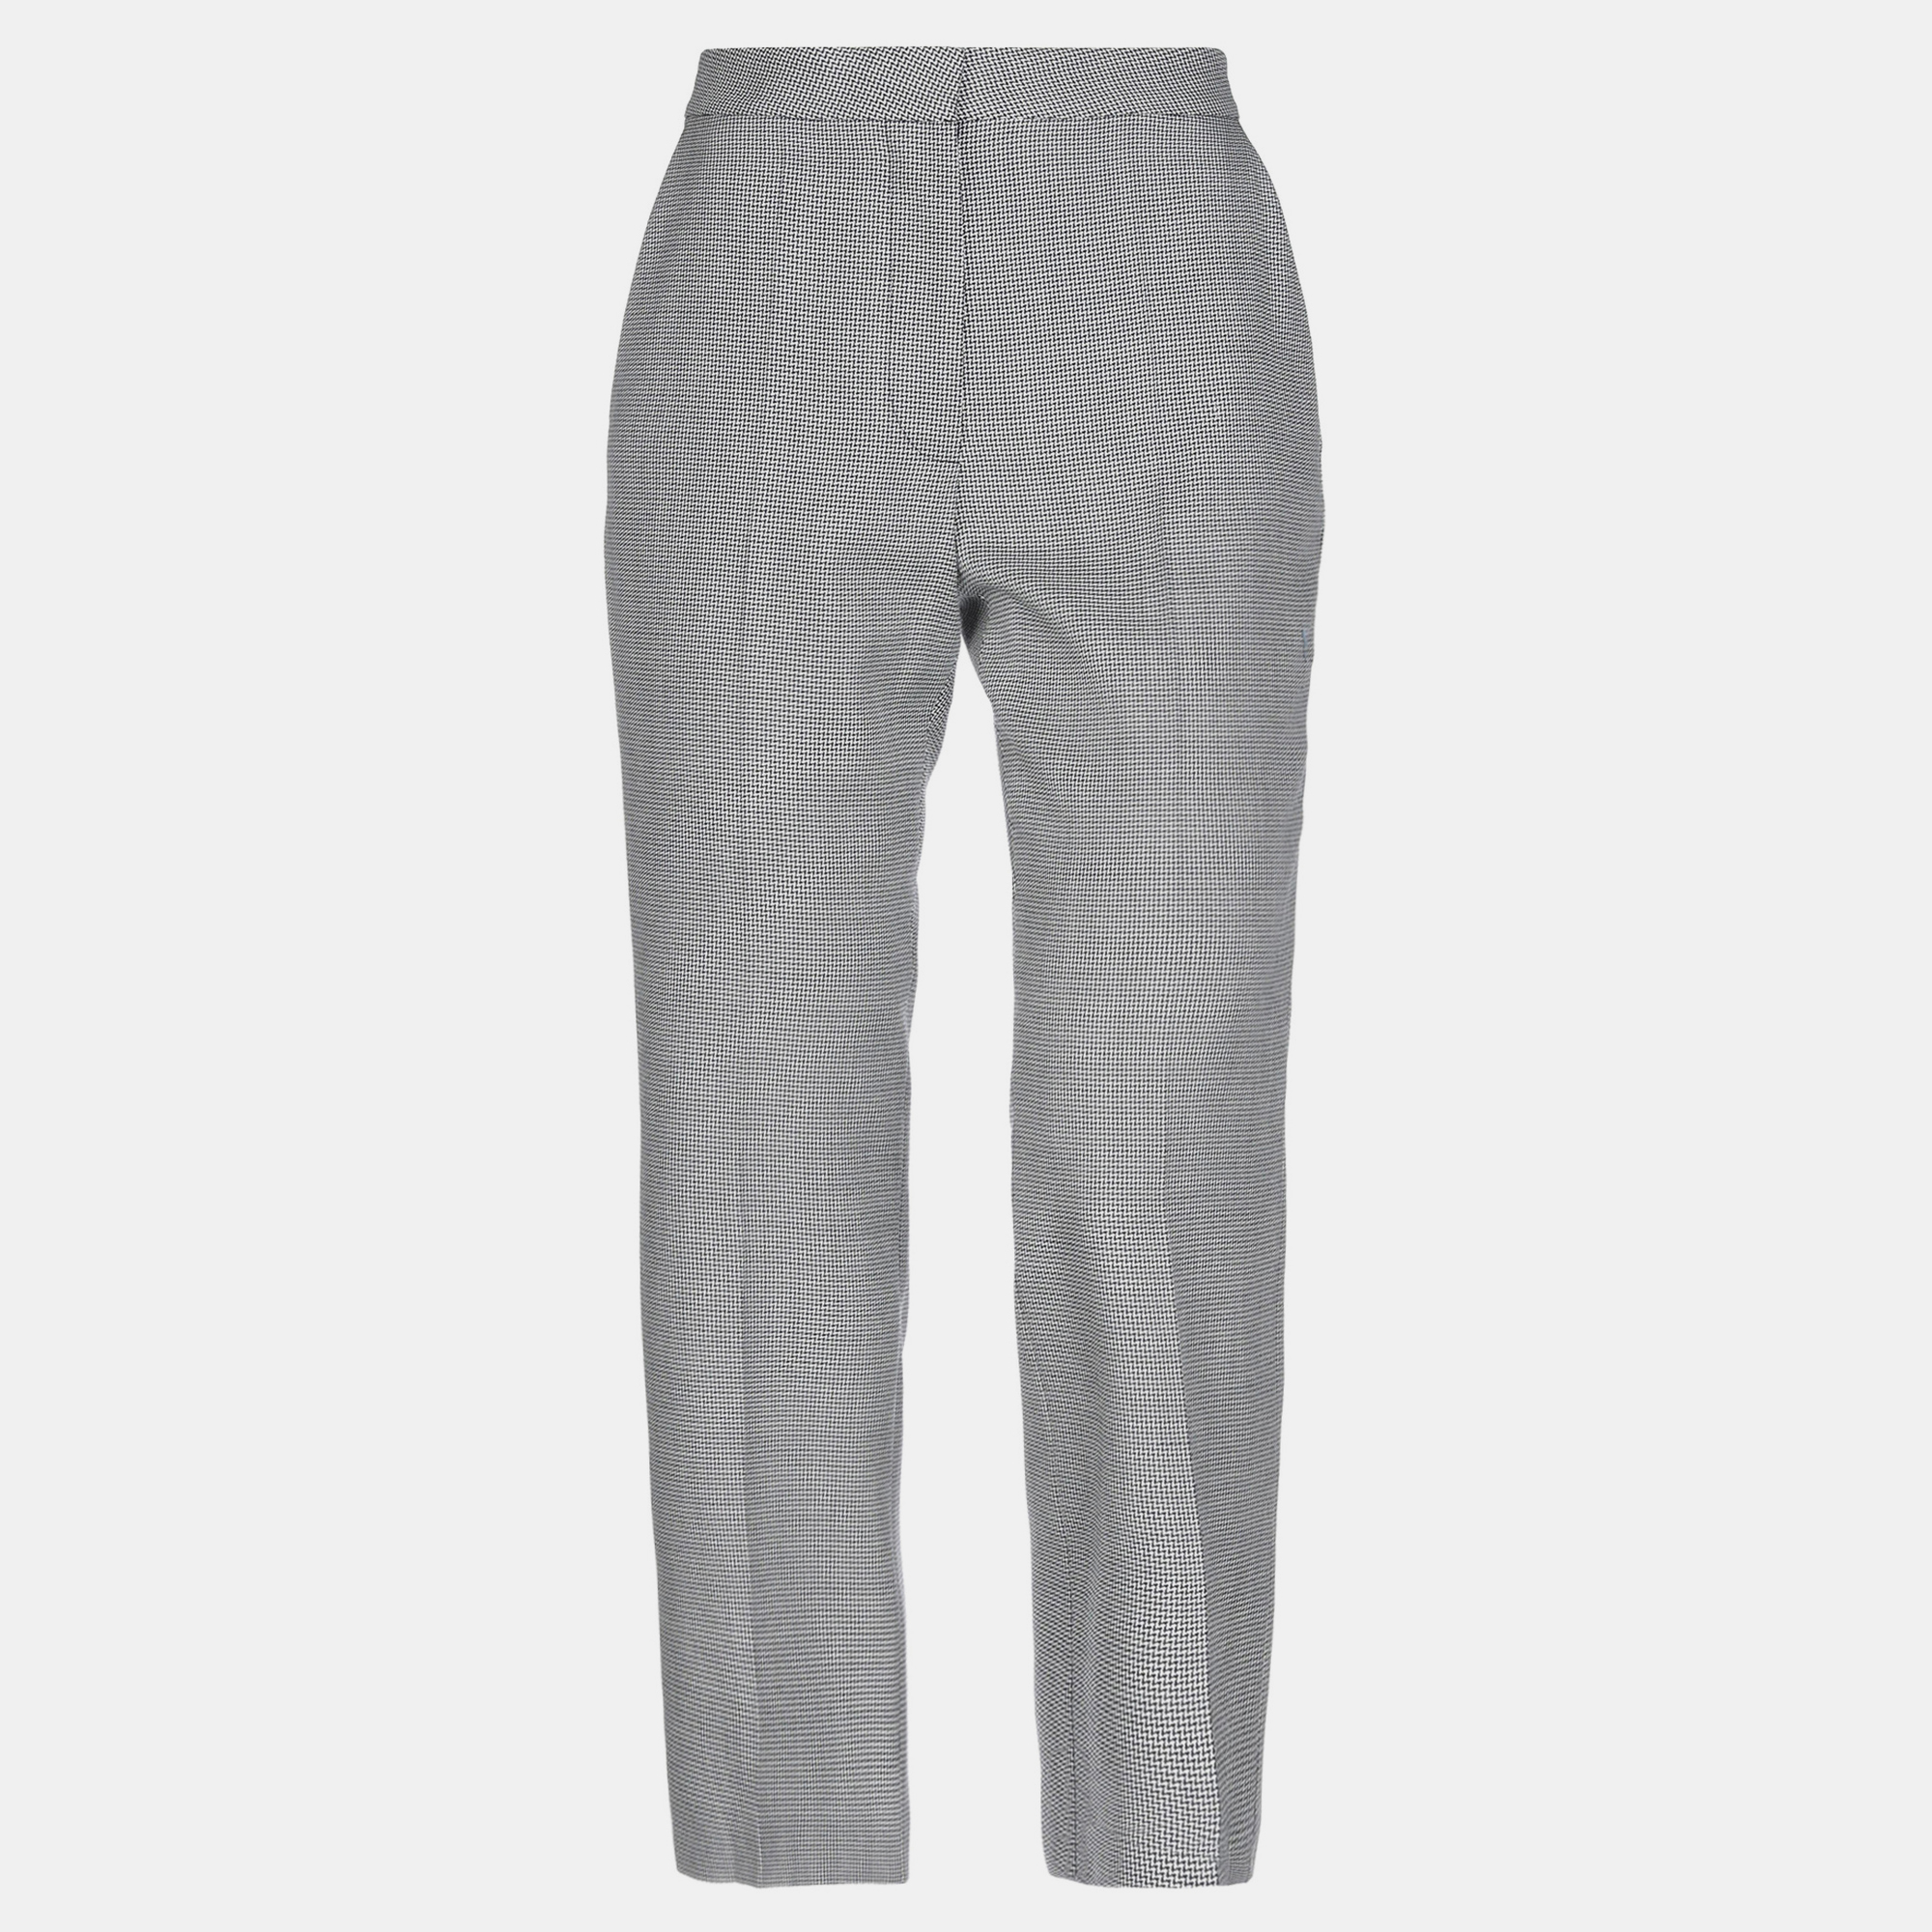 Stella mccartney black/white patterned wool pants s (it 40)